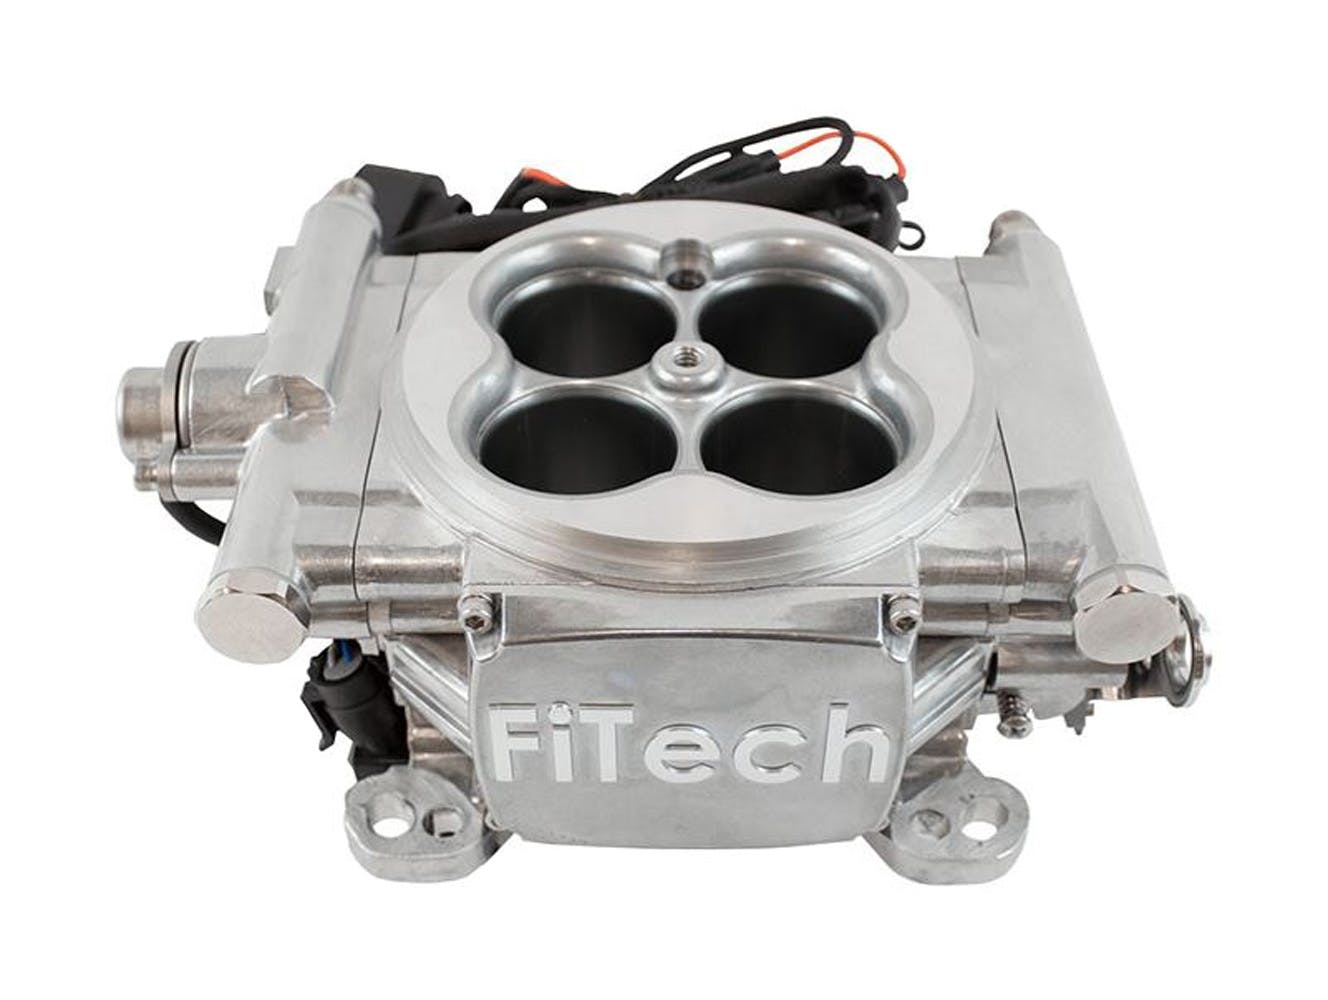 FiTech-30001-1